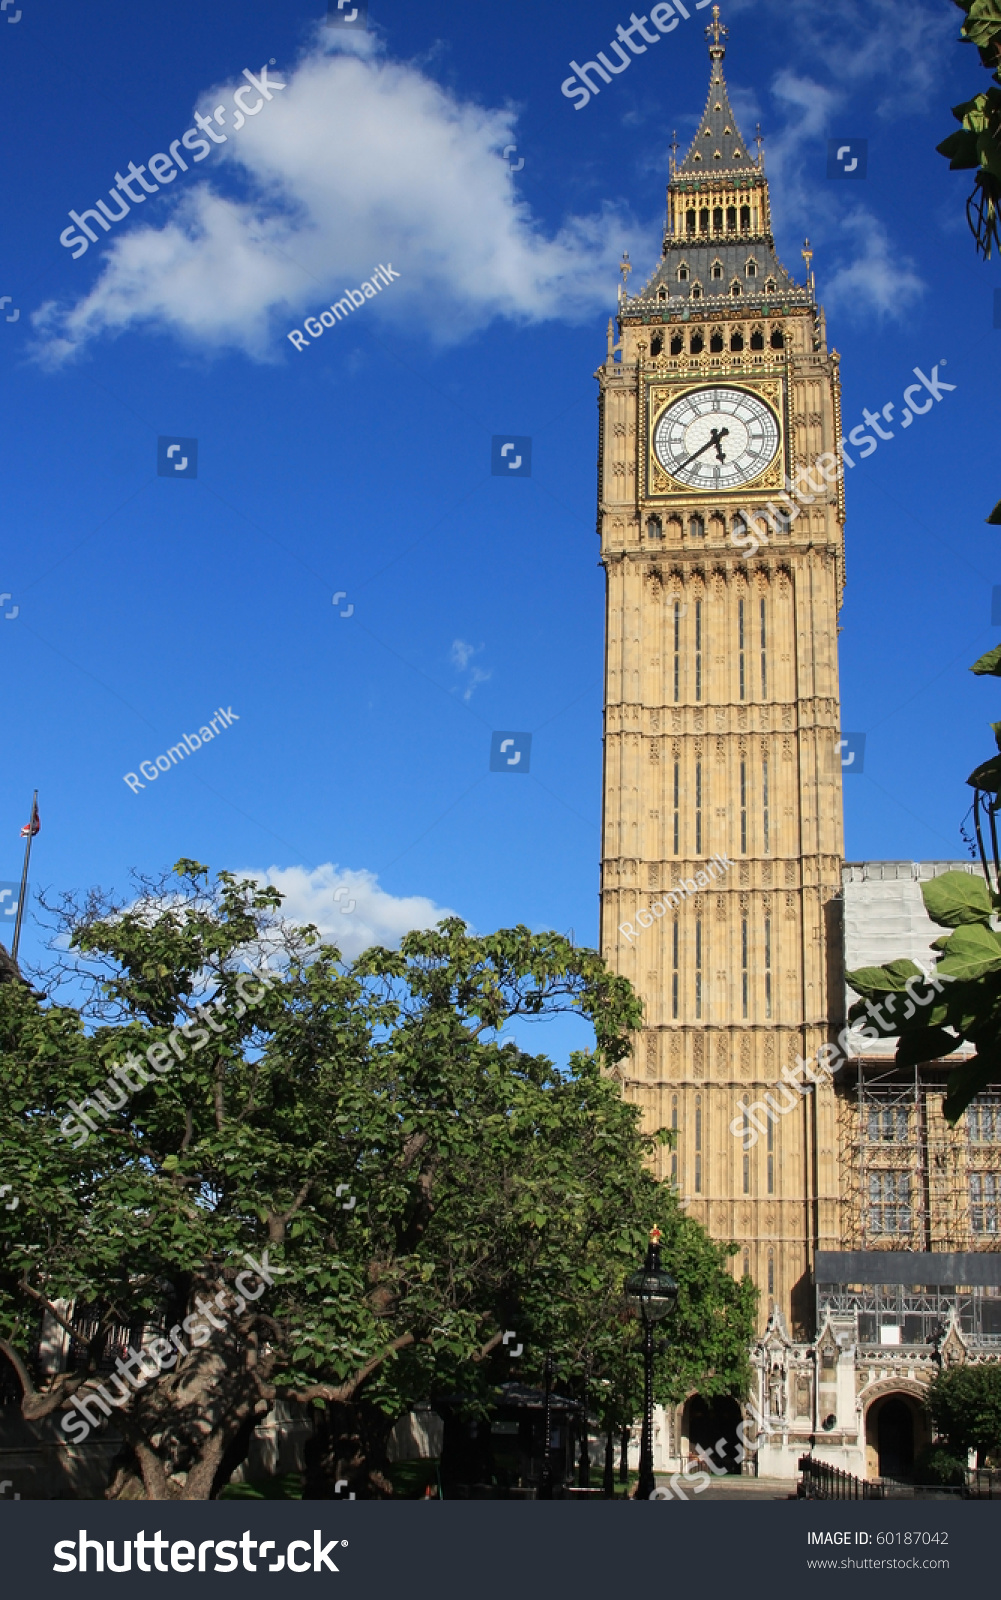 Famous Big Ben Clock Tower In London, Uk. Stock Photo 60187042 ...